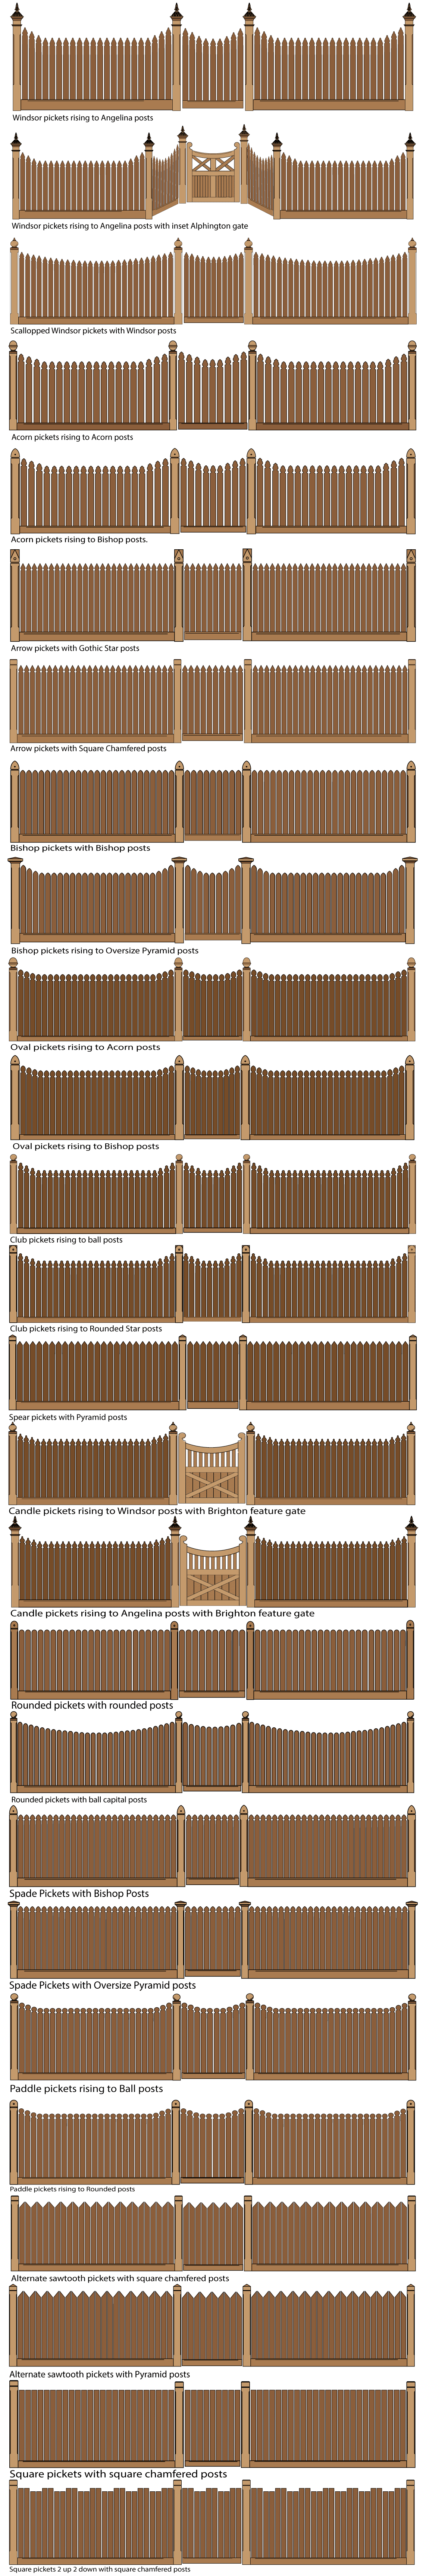 Picket fence designs